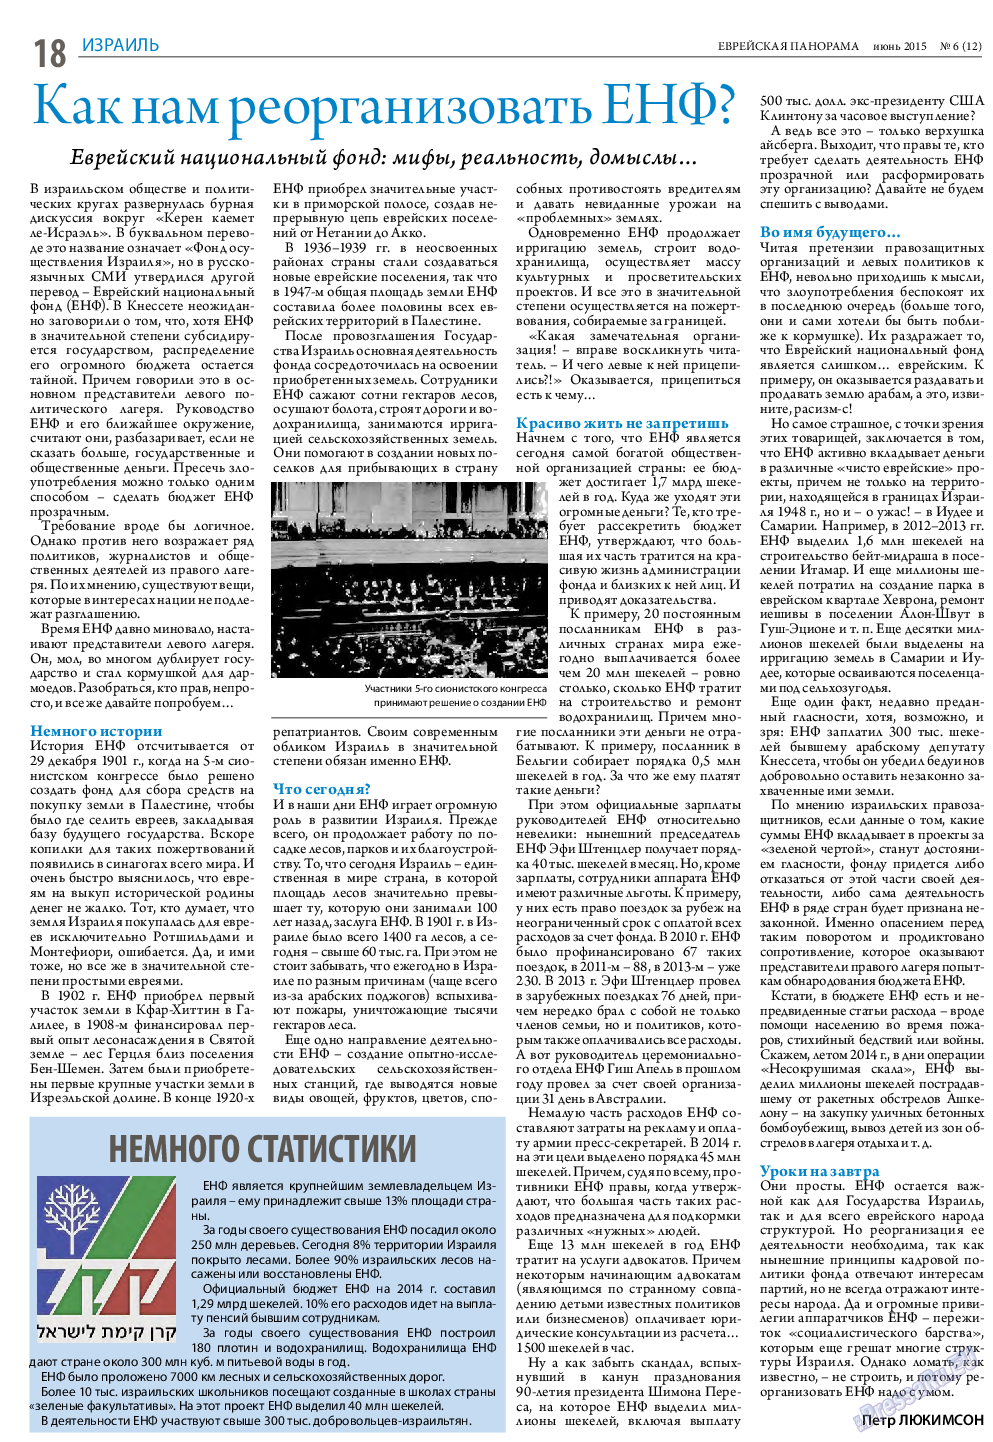 Еврейская панорама, газета. 2015 №6 стр.18